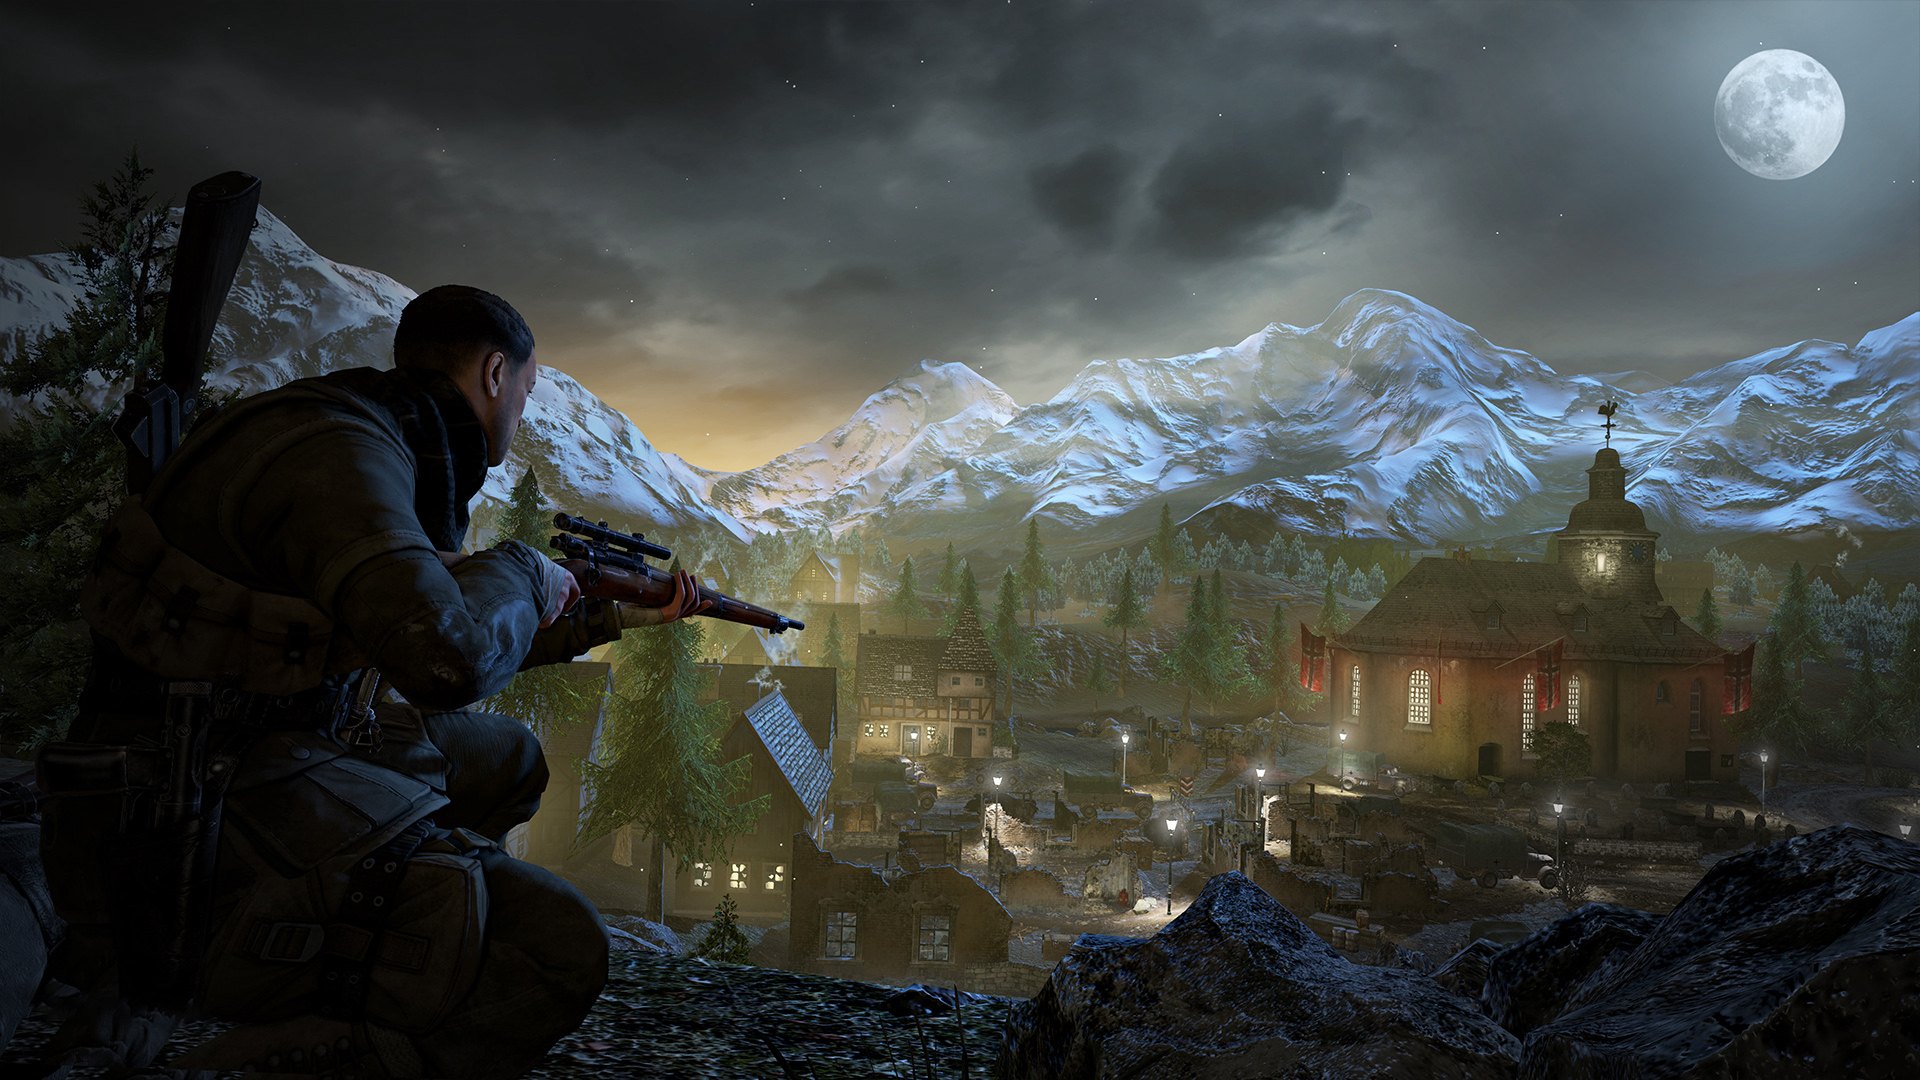 Sniper Elite V2 Remastered Steam Altergift